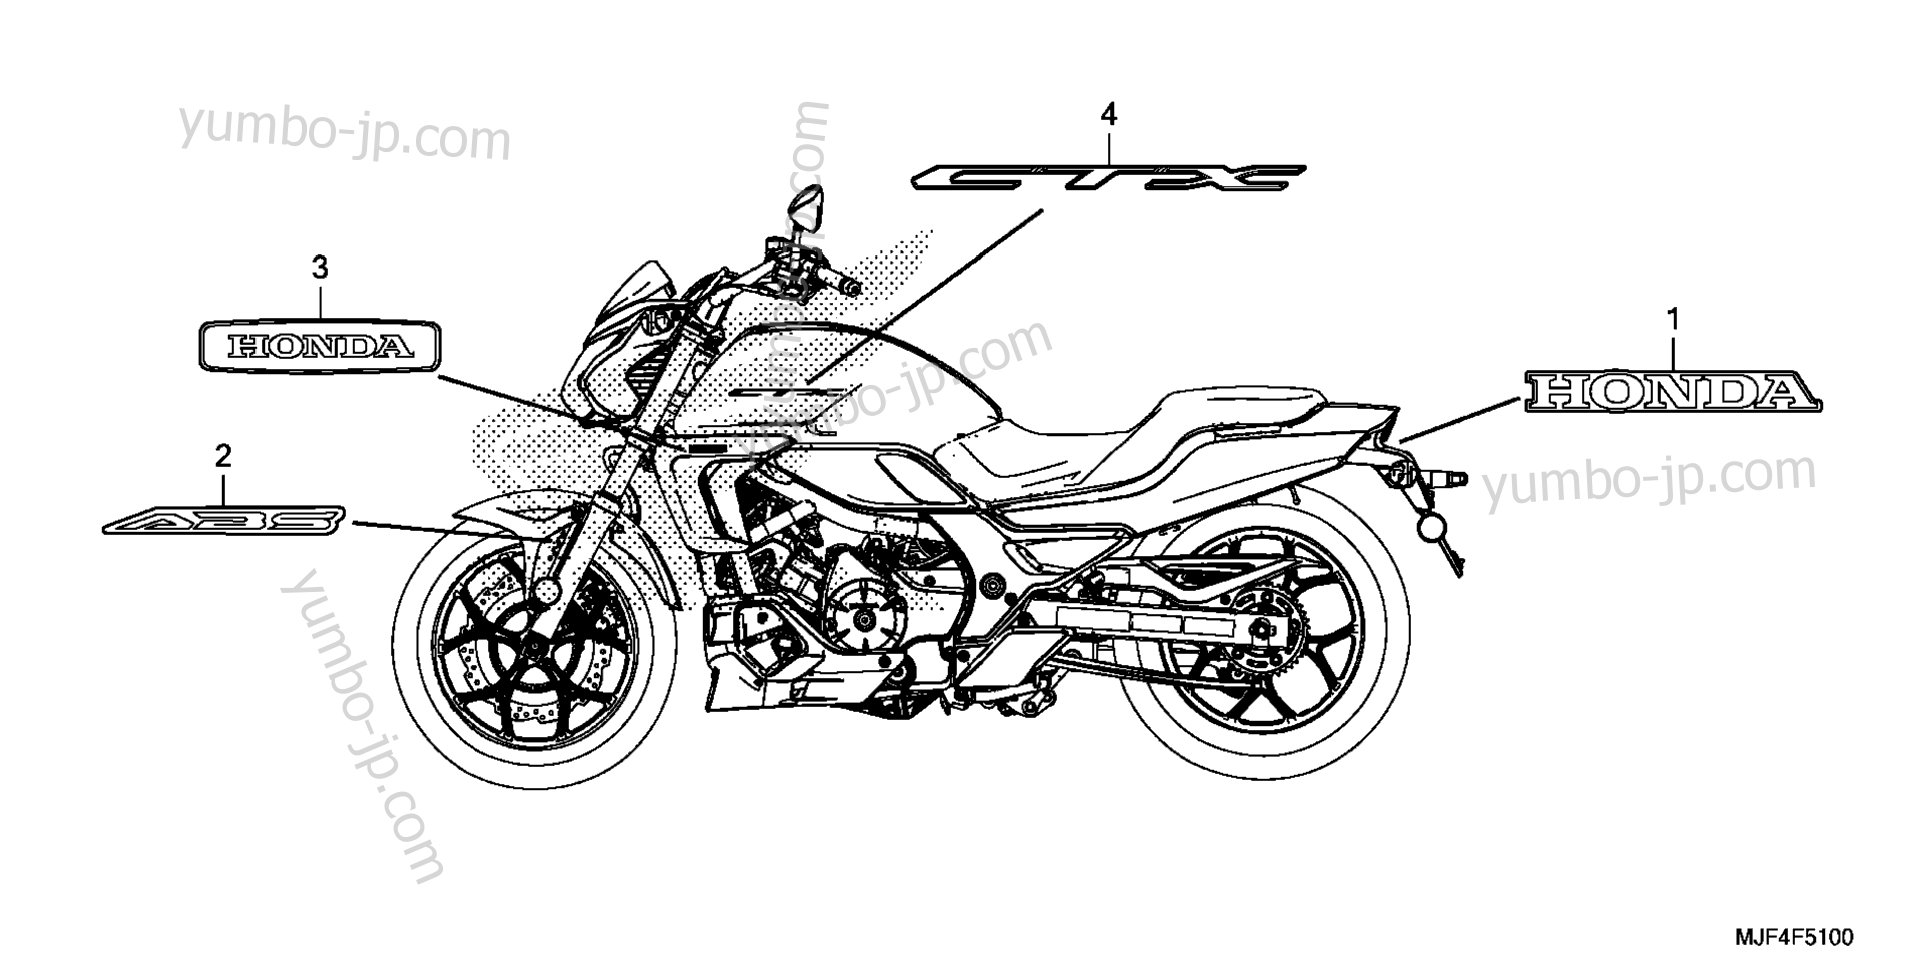 MARK / EMBLEM for motorcycles HONDA CTX700N A 2015 year